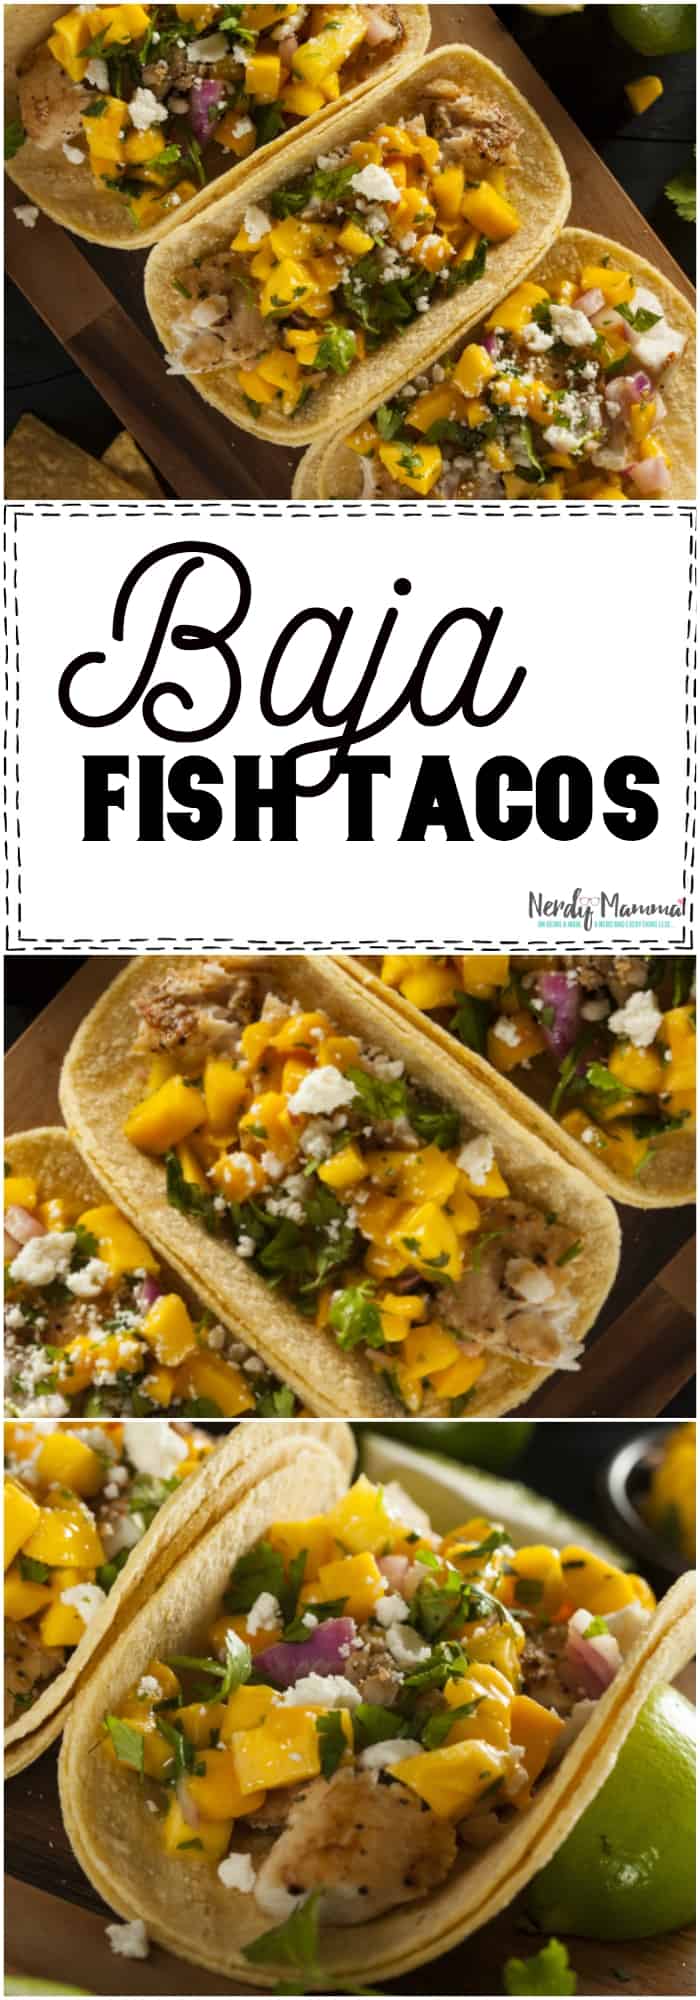 I absolutely adore this ridiculousy easy recipe for Baja Fish Tacos. So good. #taco #fishtaco #bajafishtaco #recipe #yummy #easyrecipe #eat #food